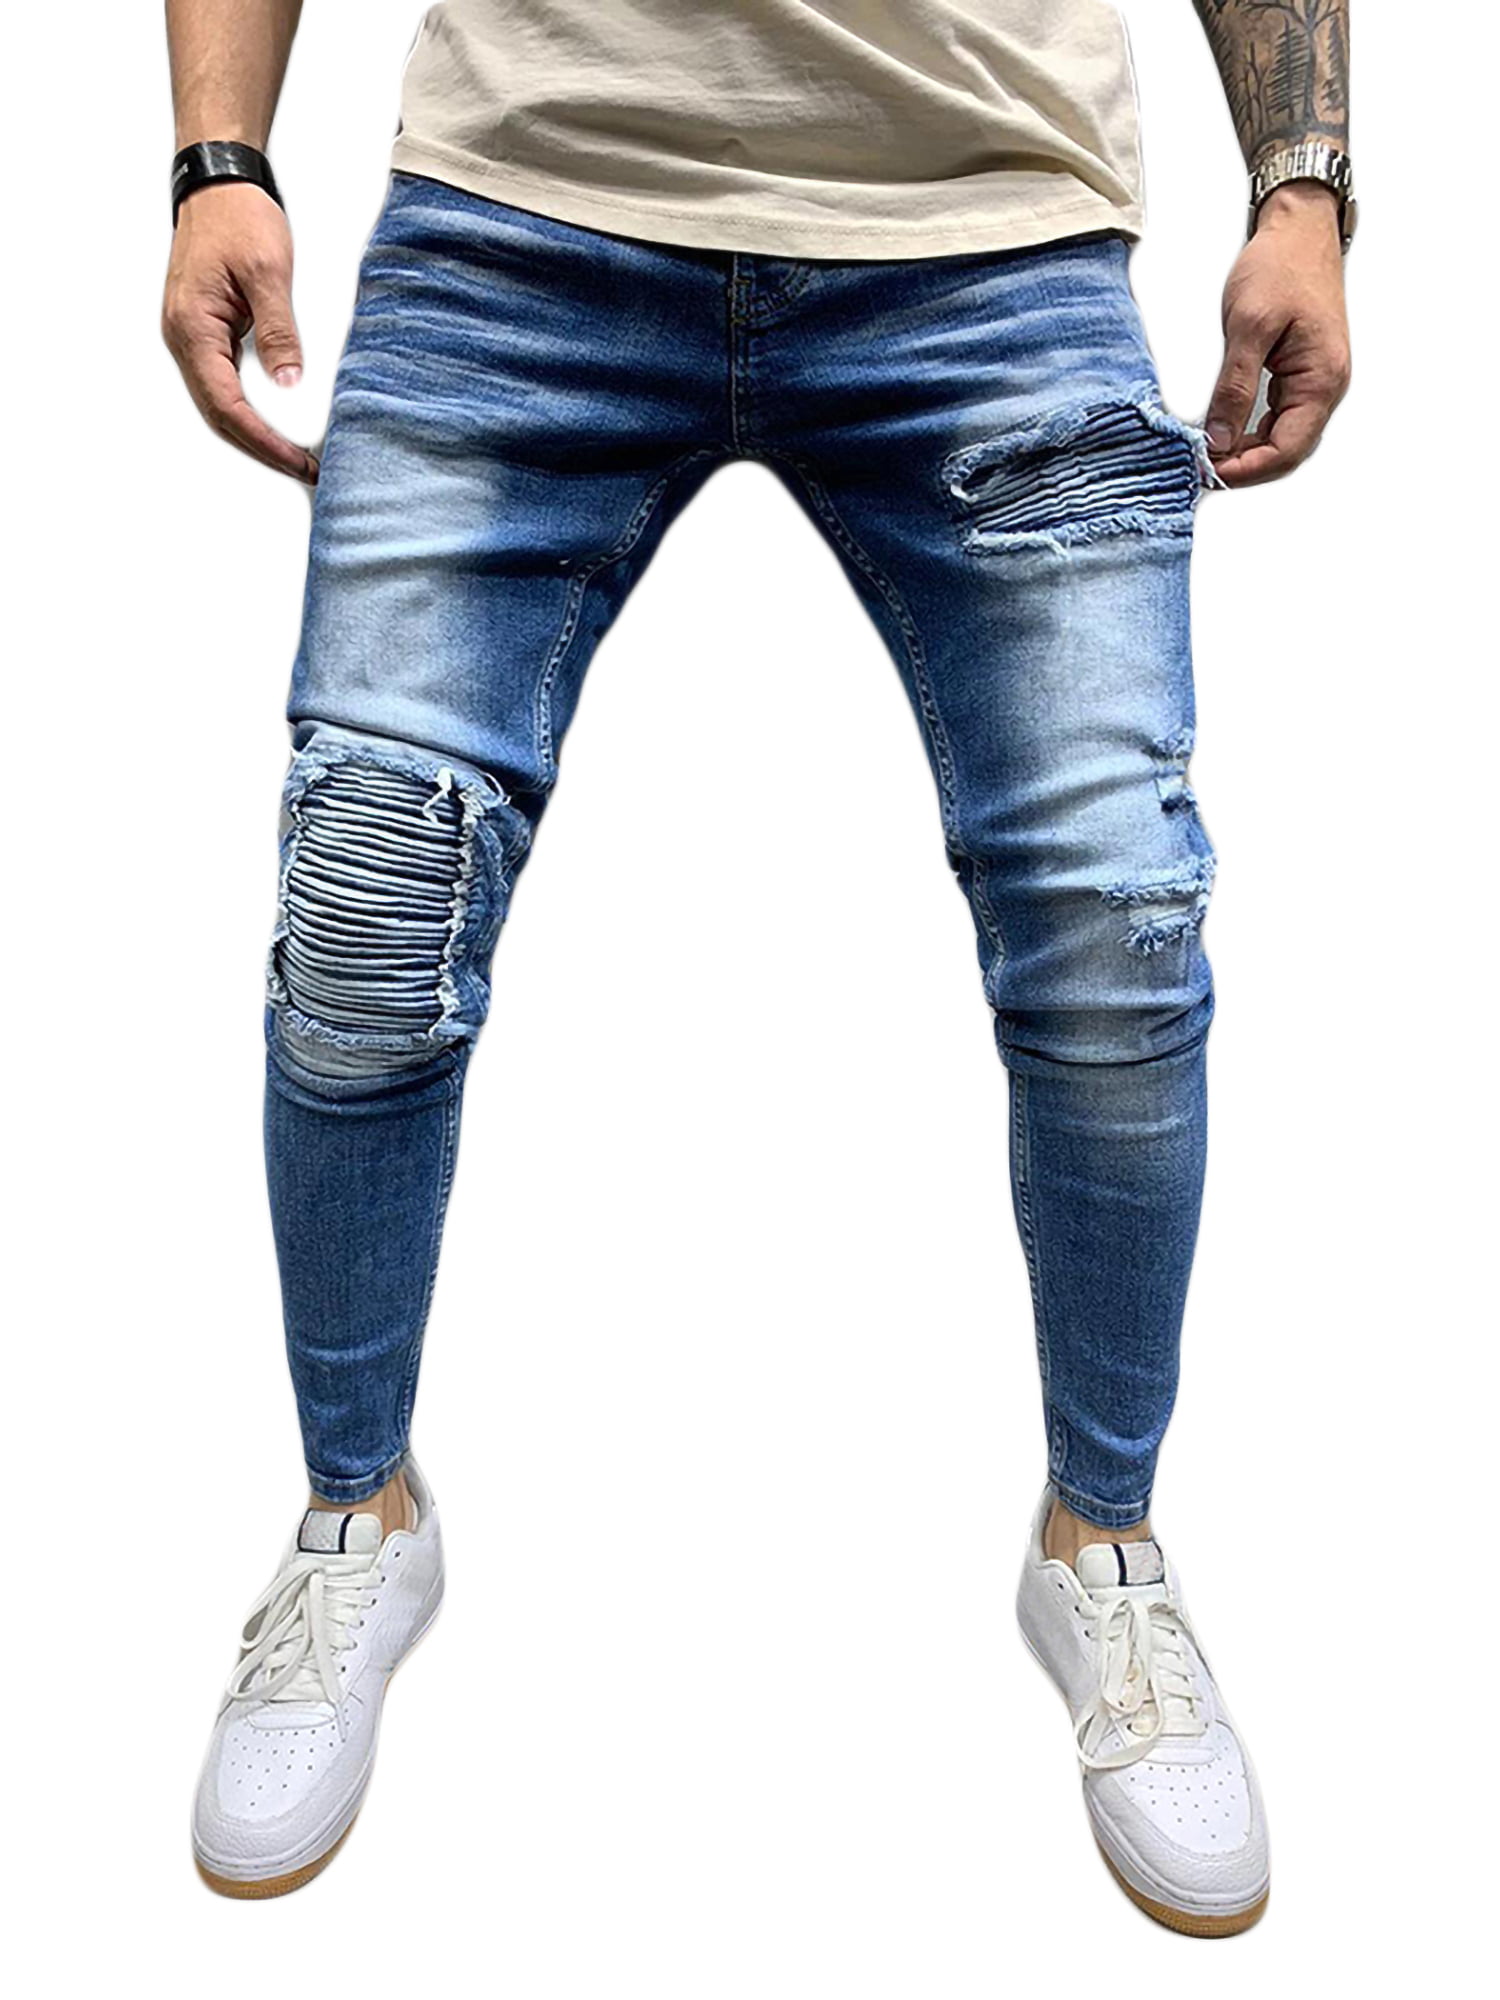 Mason Men's Ripped Skinny Jeans Distressed Pants Track Denim Pants Biker Jeans 